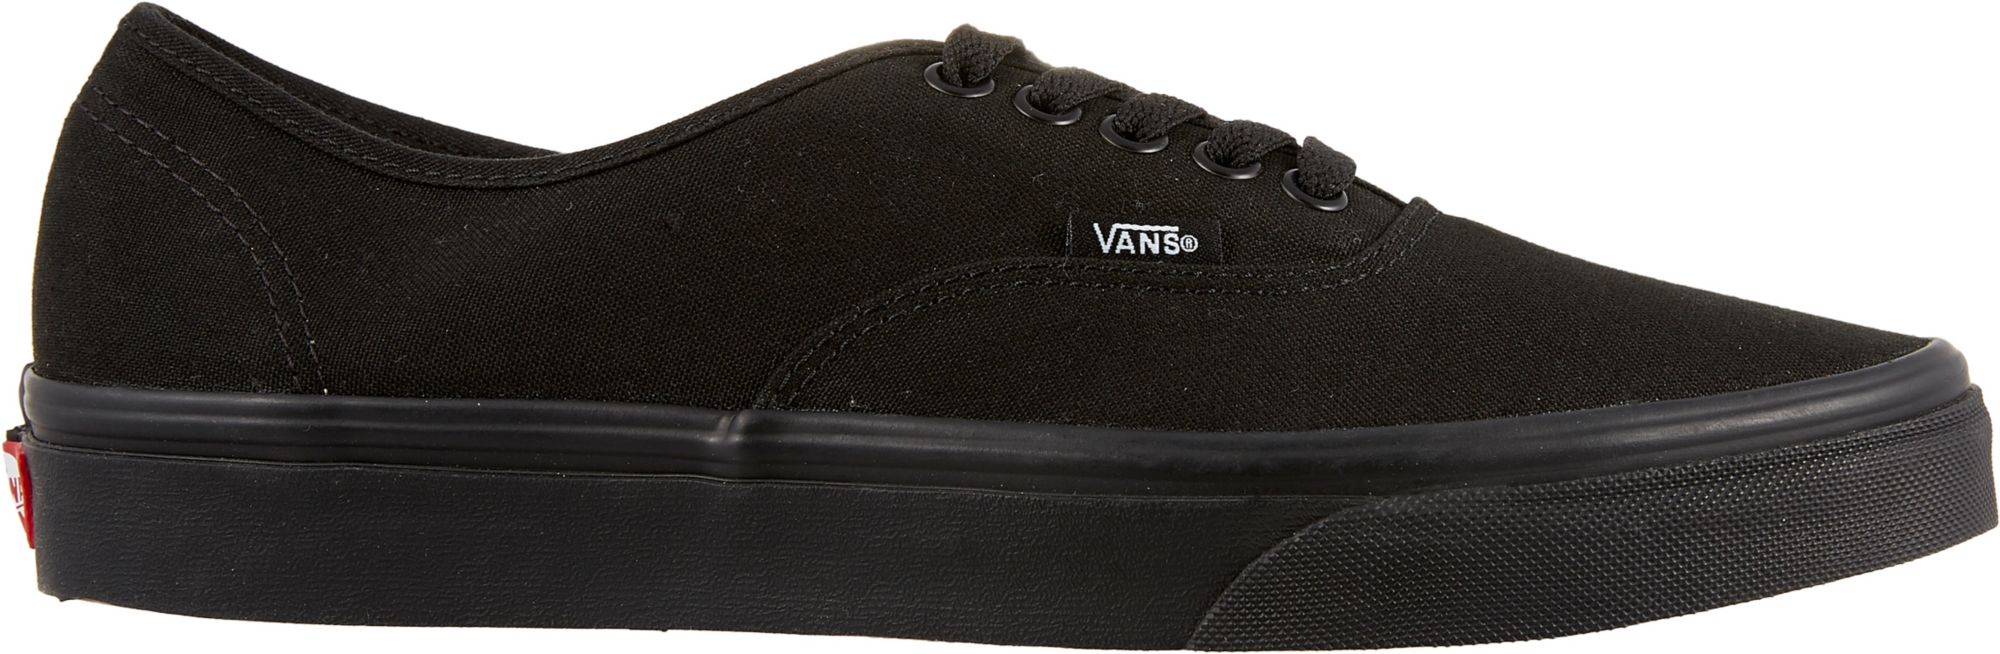 Vans Shoes & Vans Skate Shoes | Best Price Guarantee at DICK'S